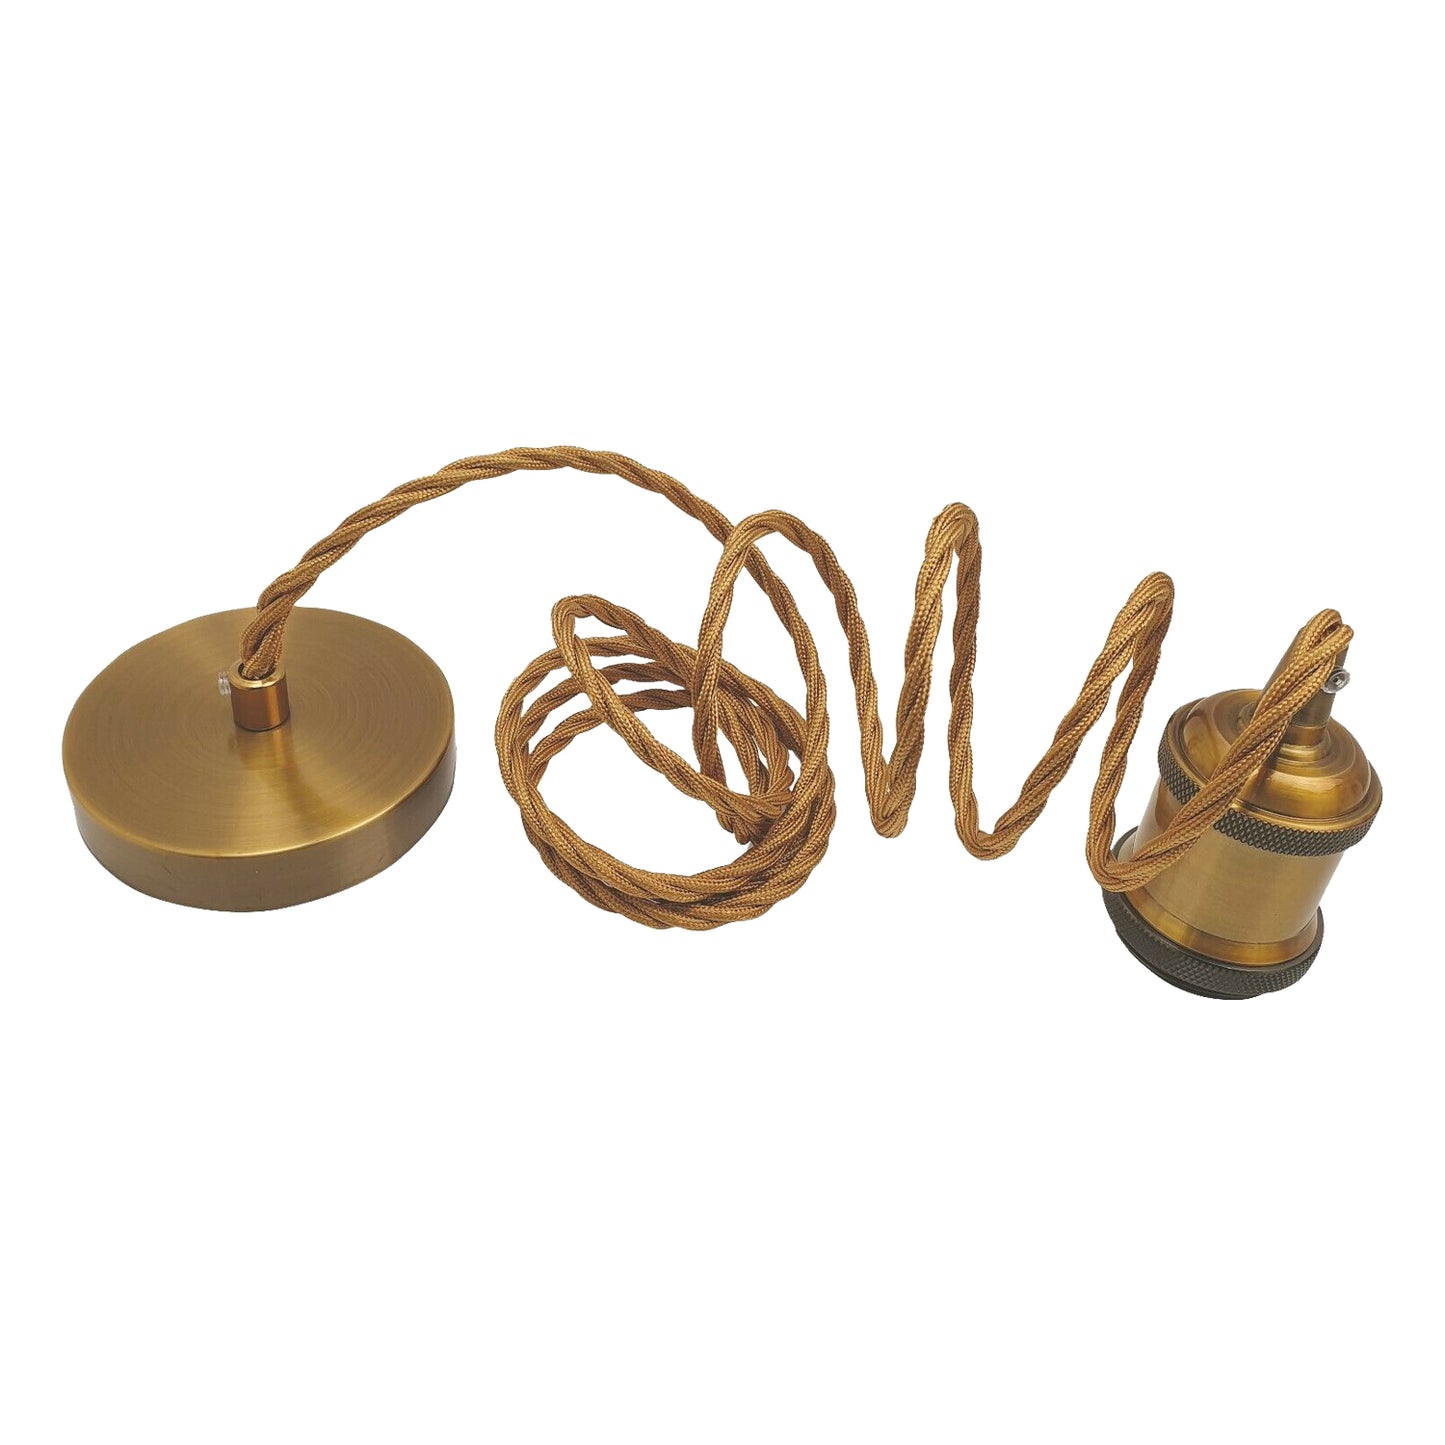 Yellow brass Vintage Metal Ceiling Light Fitting Gold Twisted Braided Flex 2m E27 Lamp Holder Suspended Pendant Light Fitting Kit for Indoor Lightings